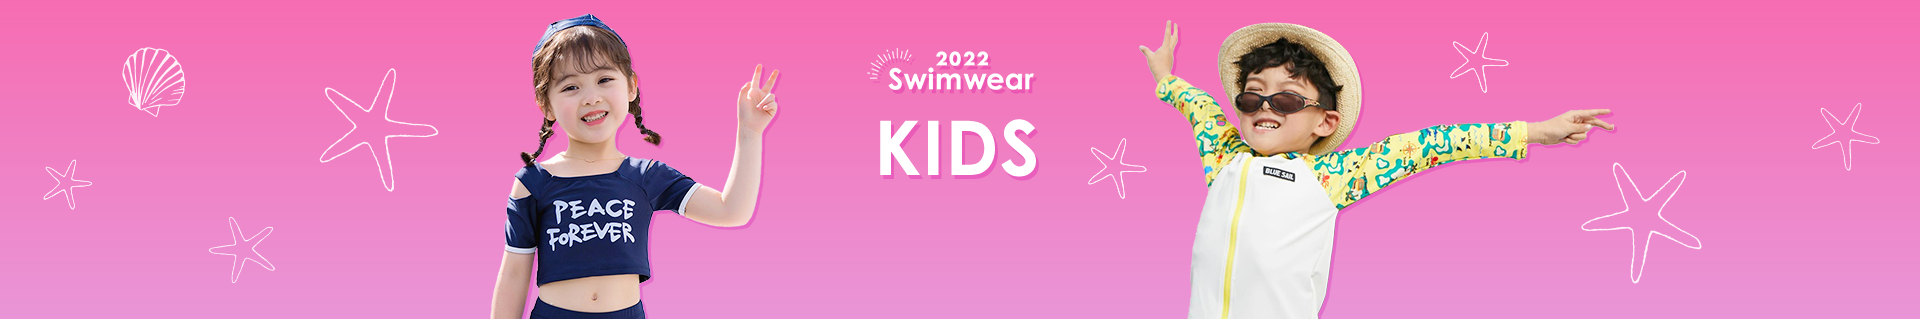 2022 swimwear KIDS